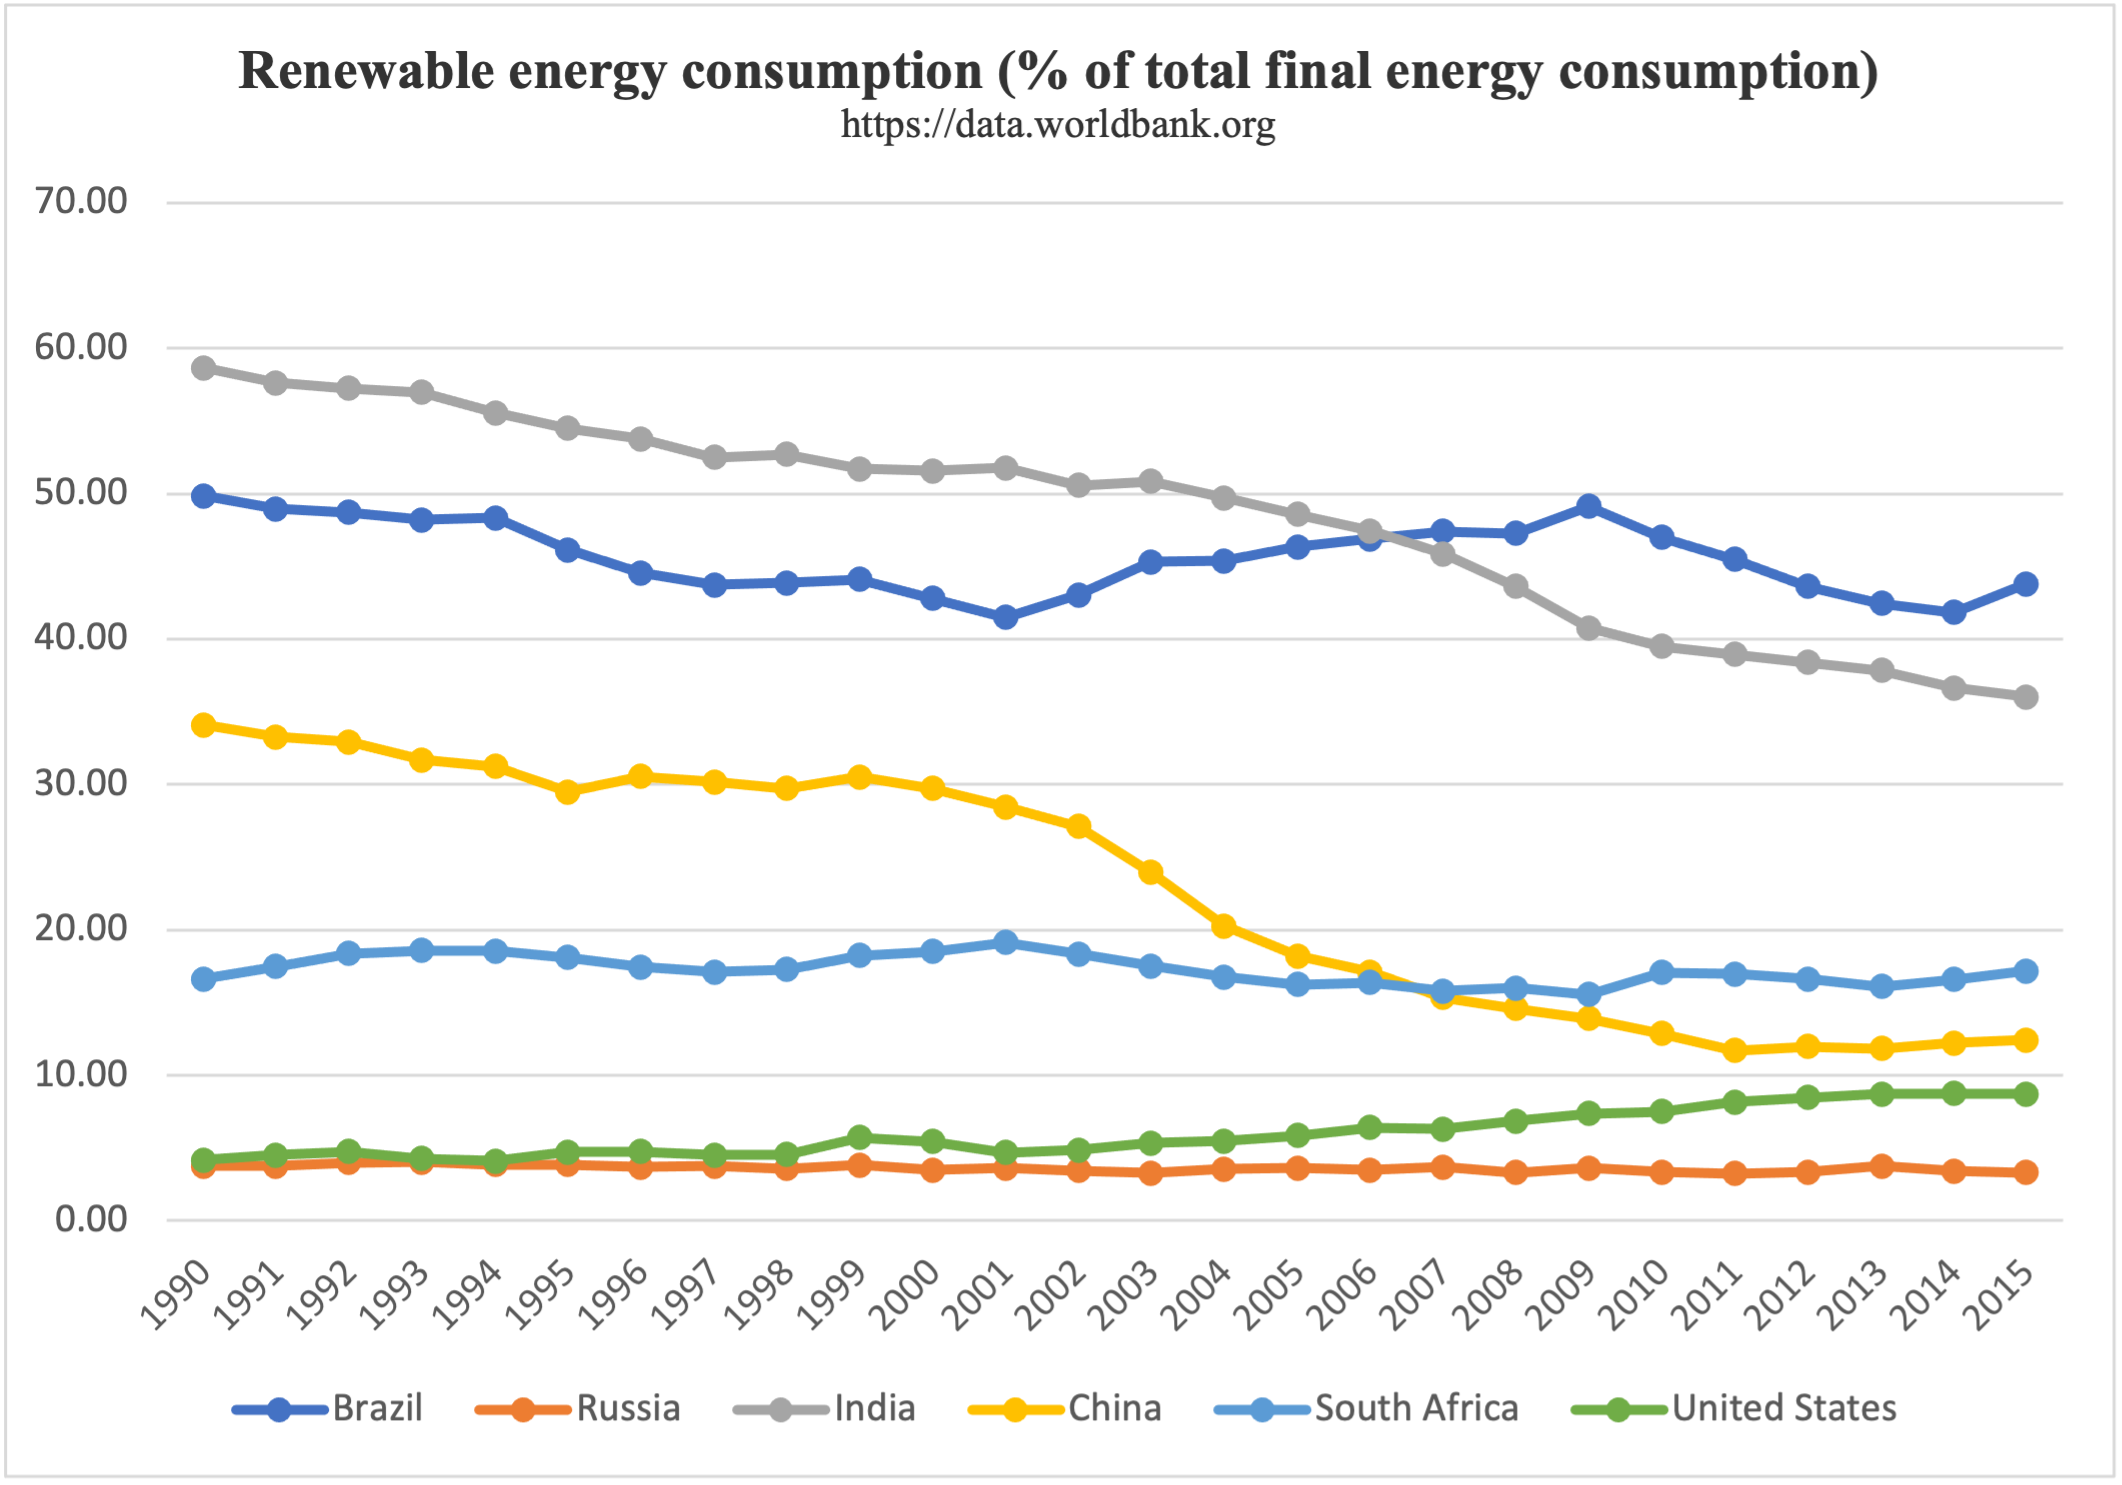 Figure 10. Renewable energy consumption (% of total final energy consumption) https://data.worlbank.org